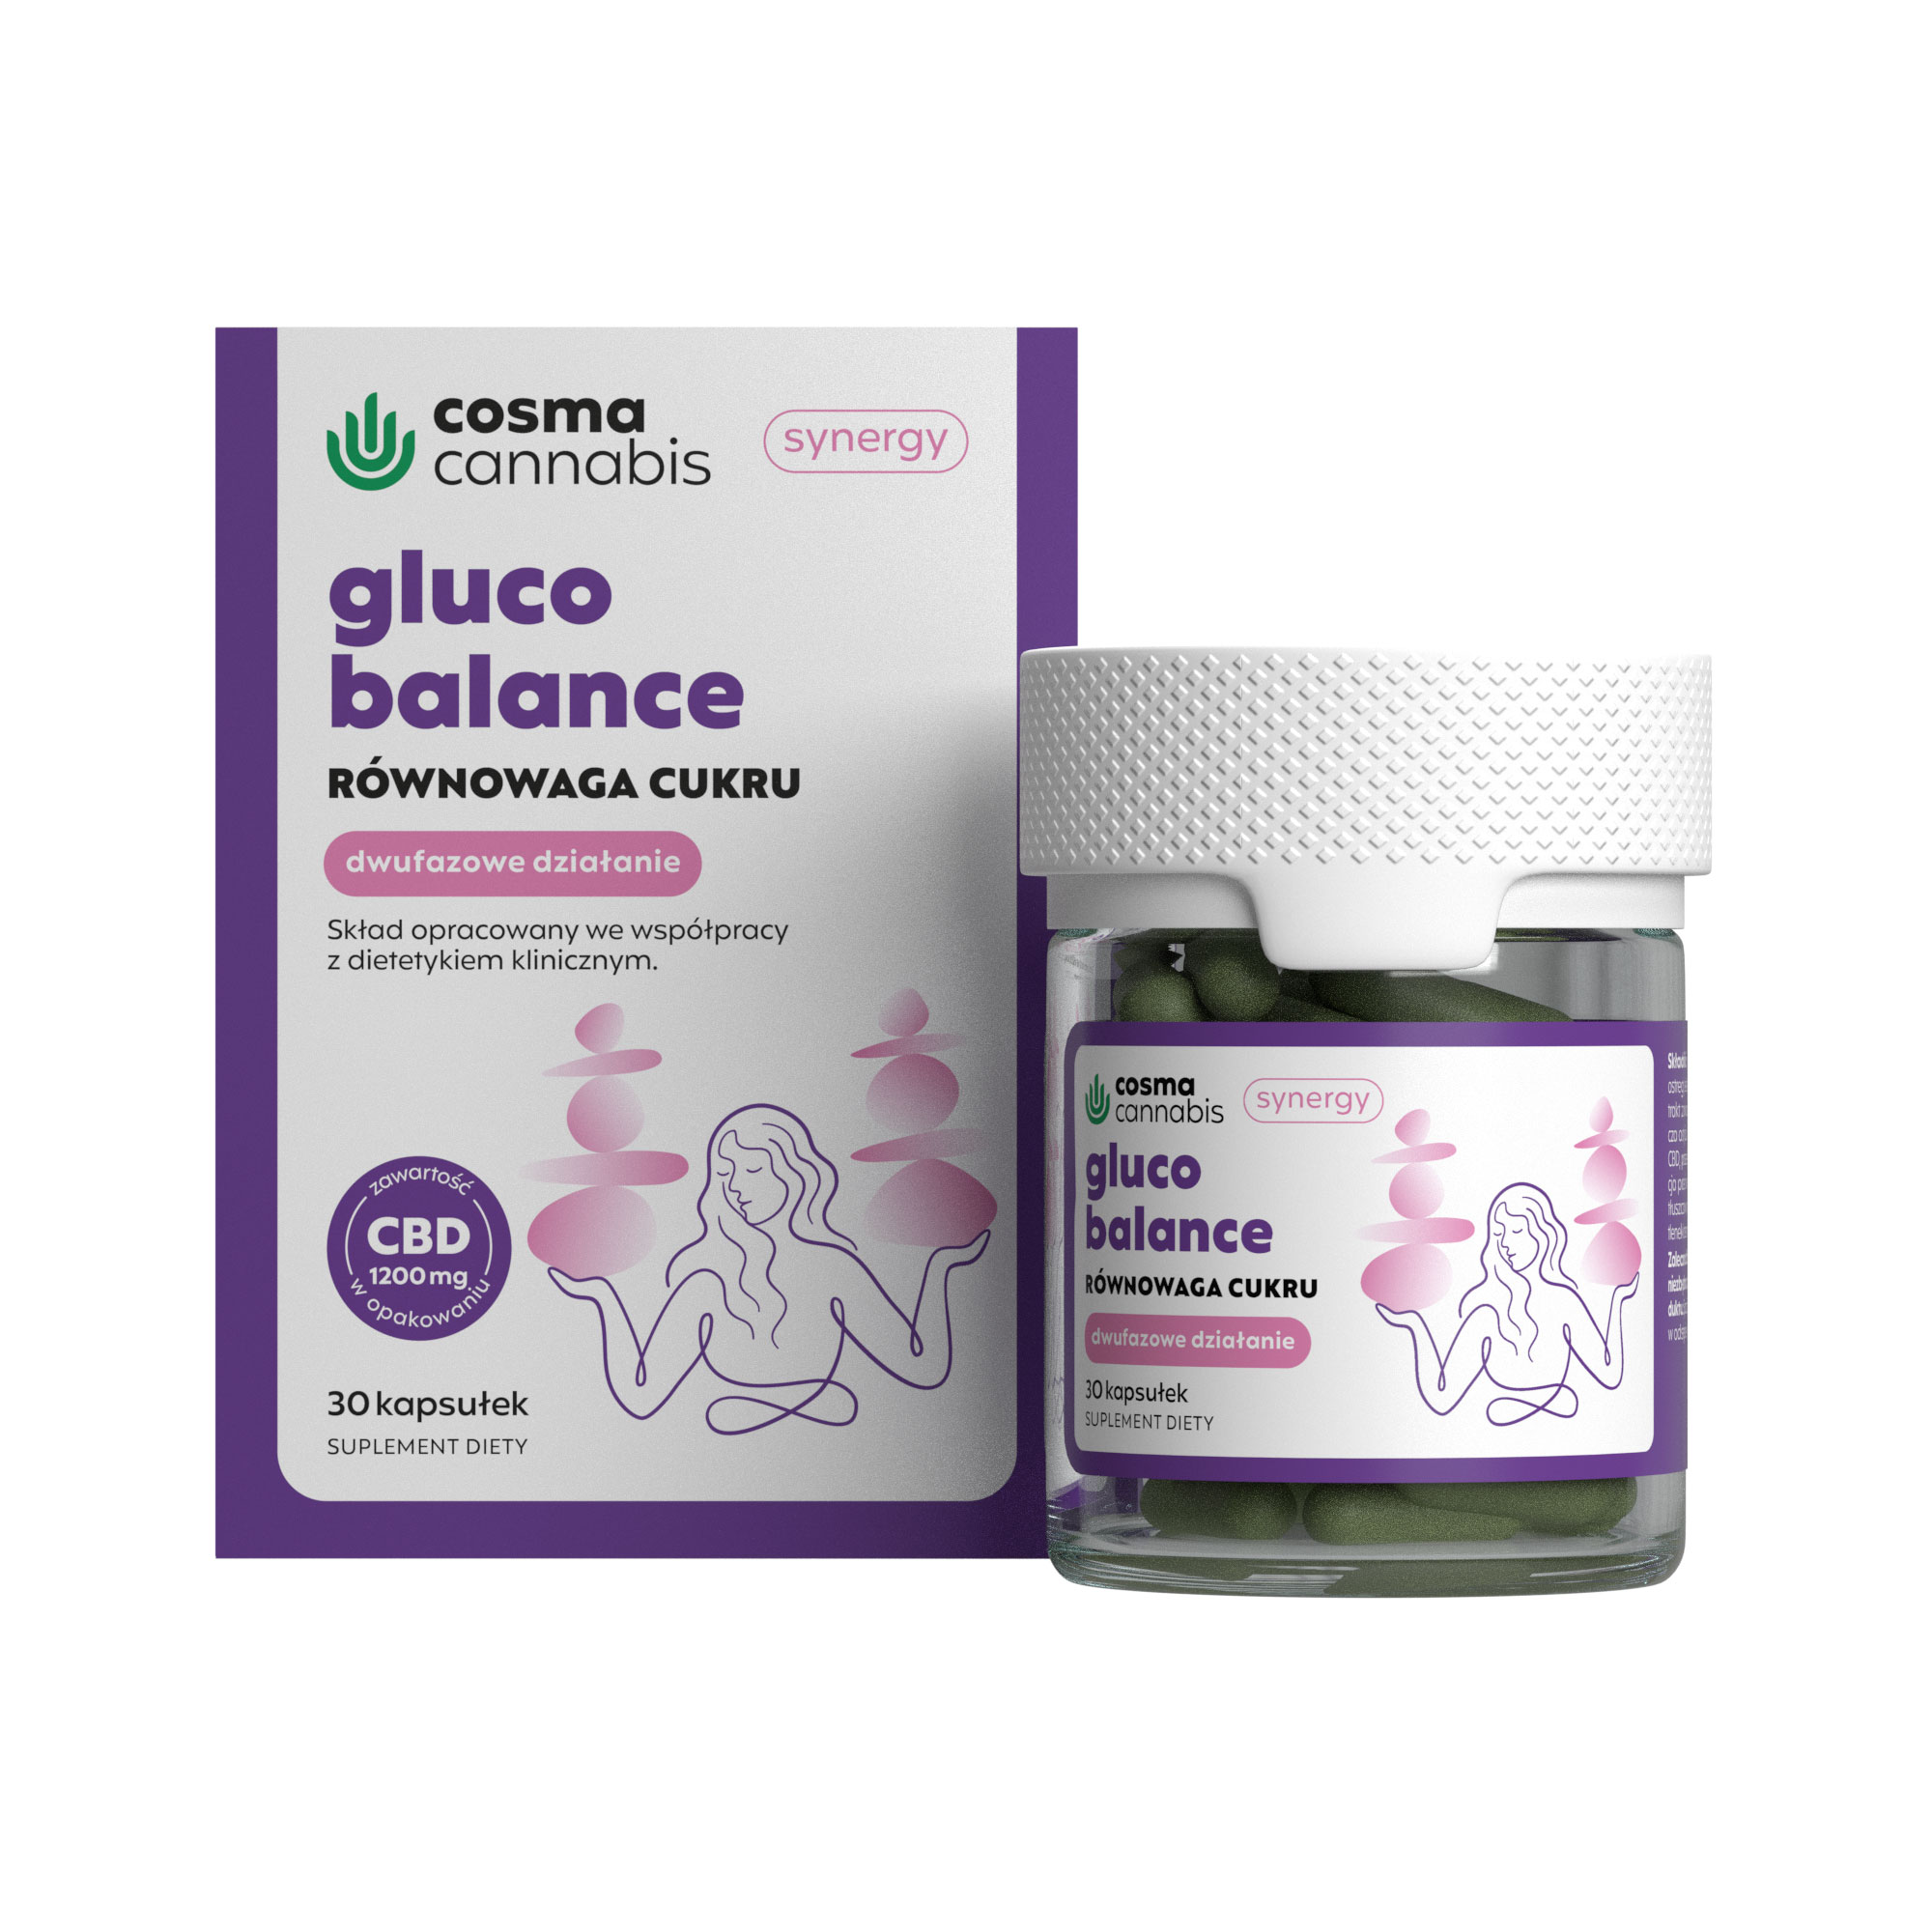 Cosma Cannabis Gluco Balance 30 kapsułek